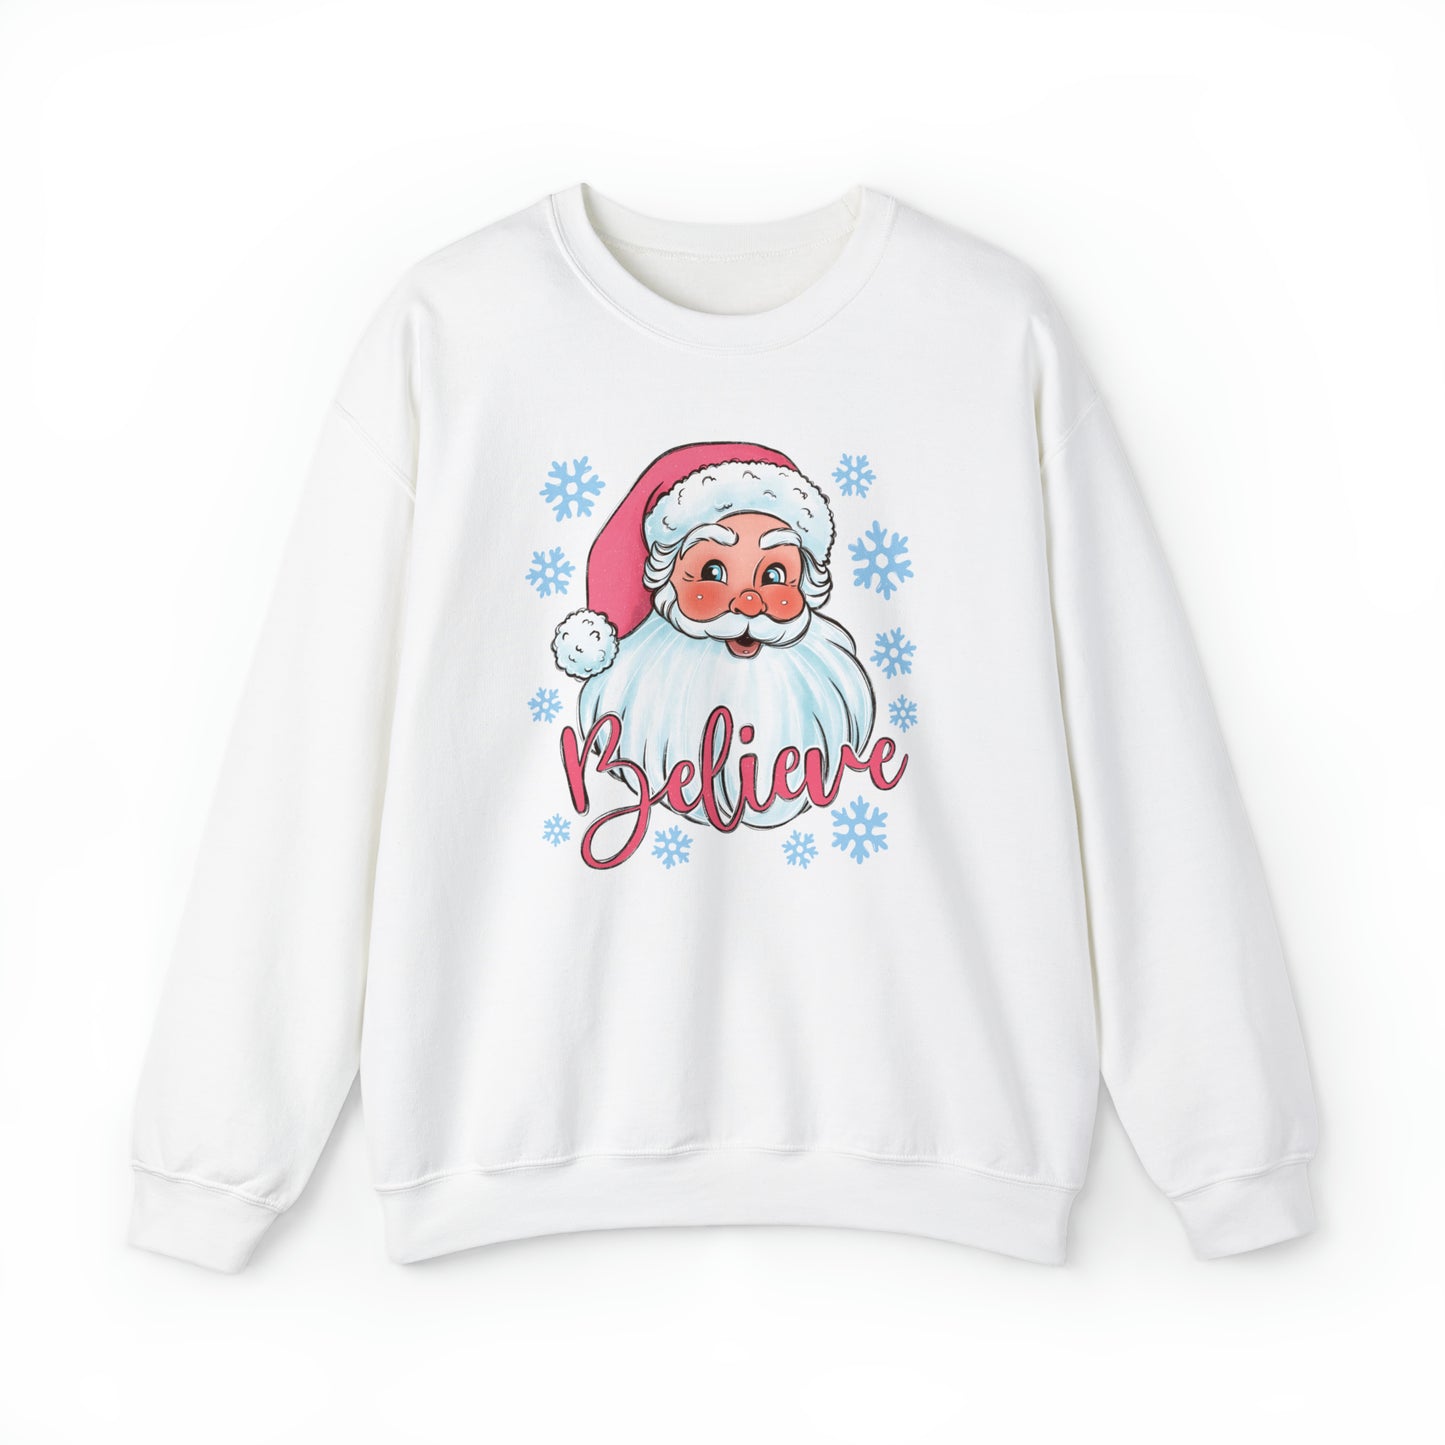 Believe Santa Christmas Crewneck Sweater